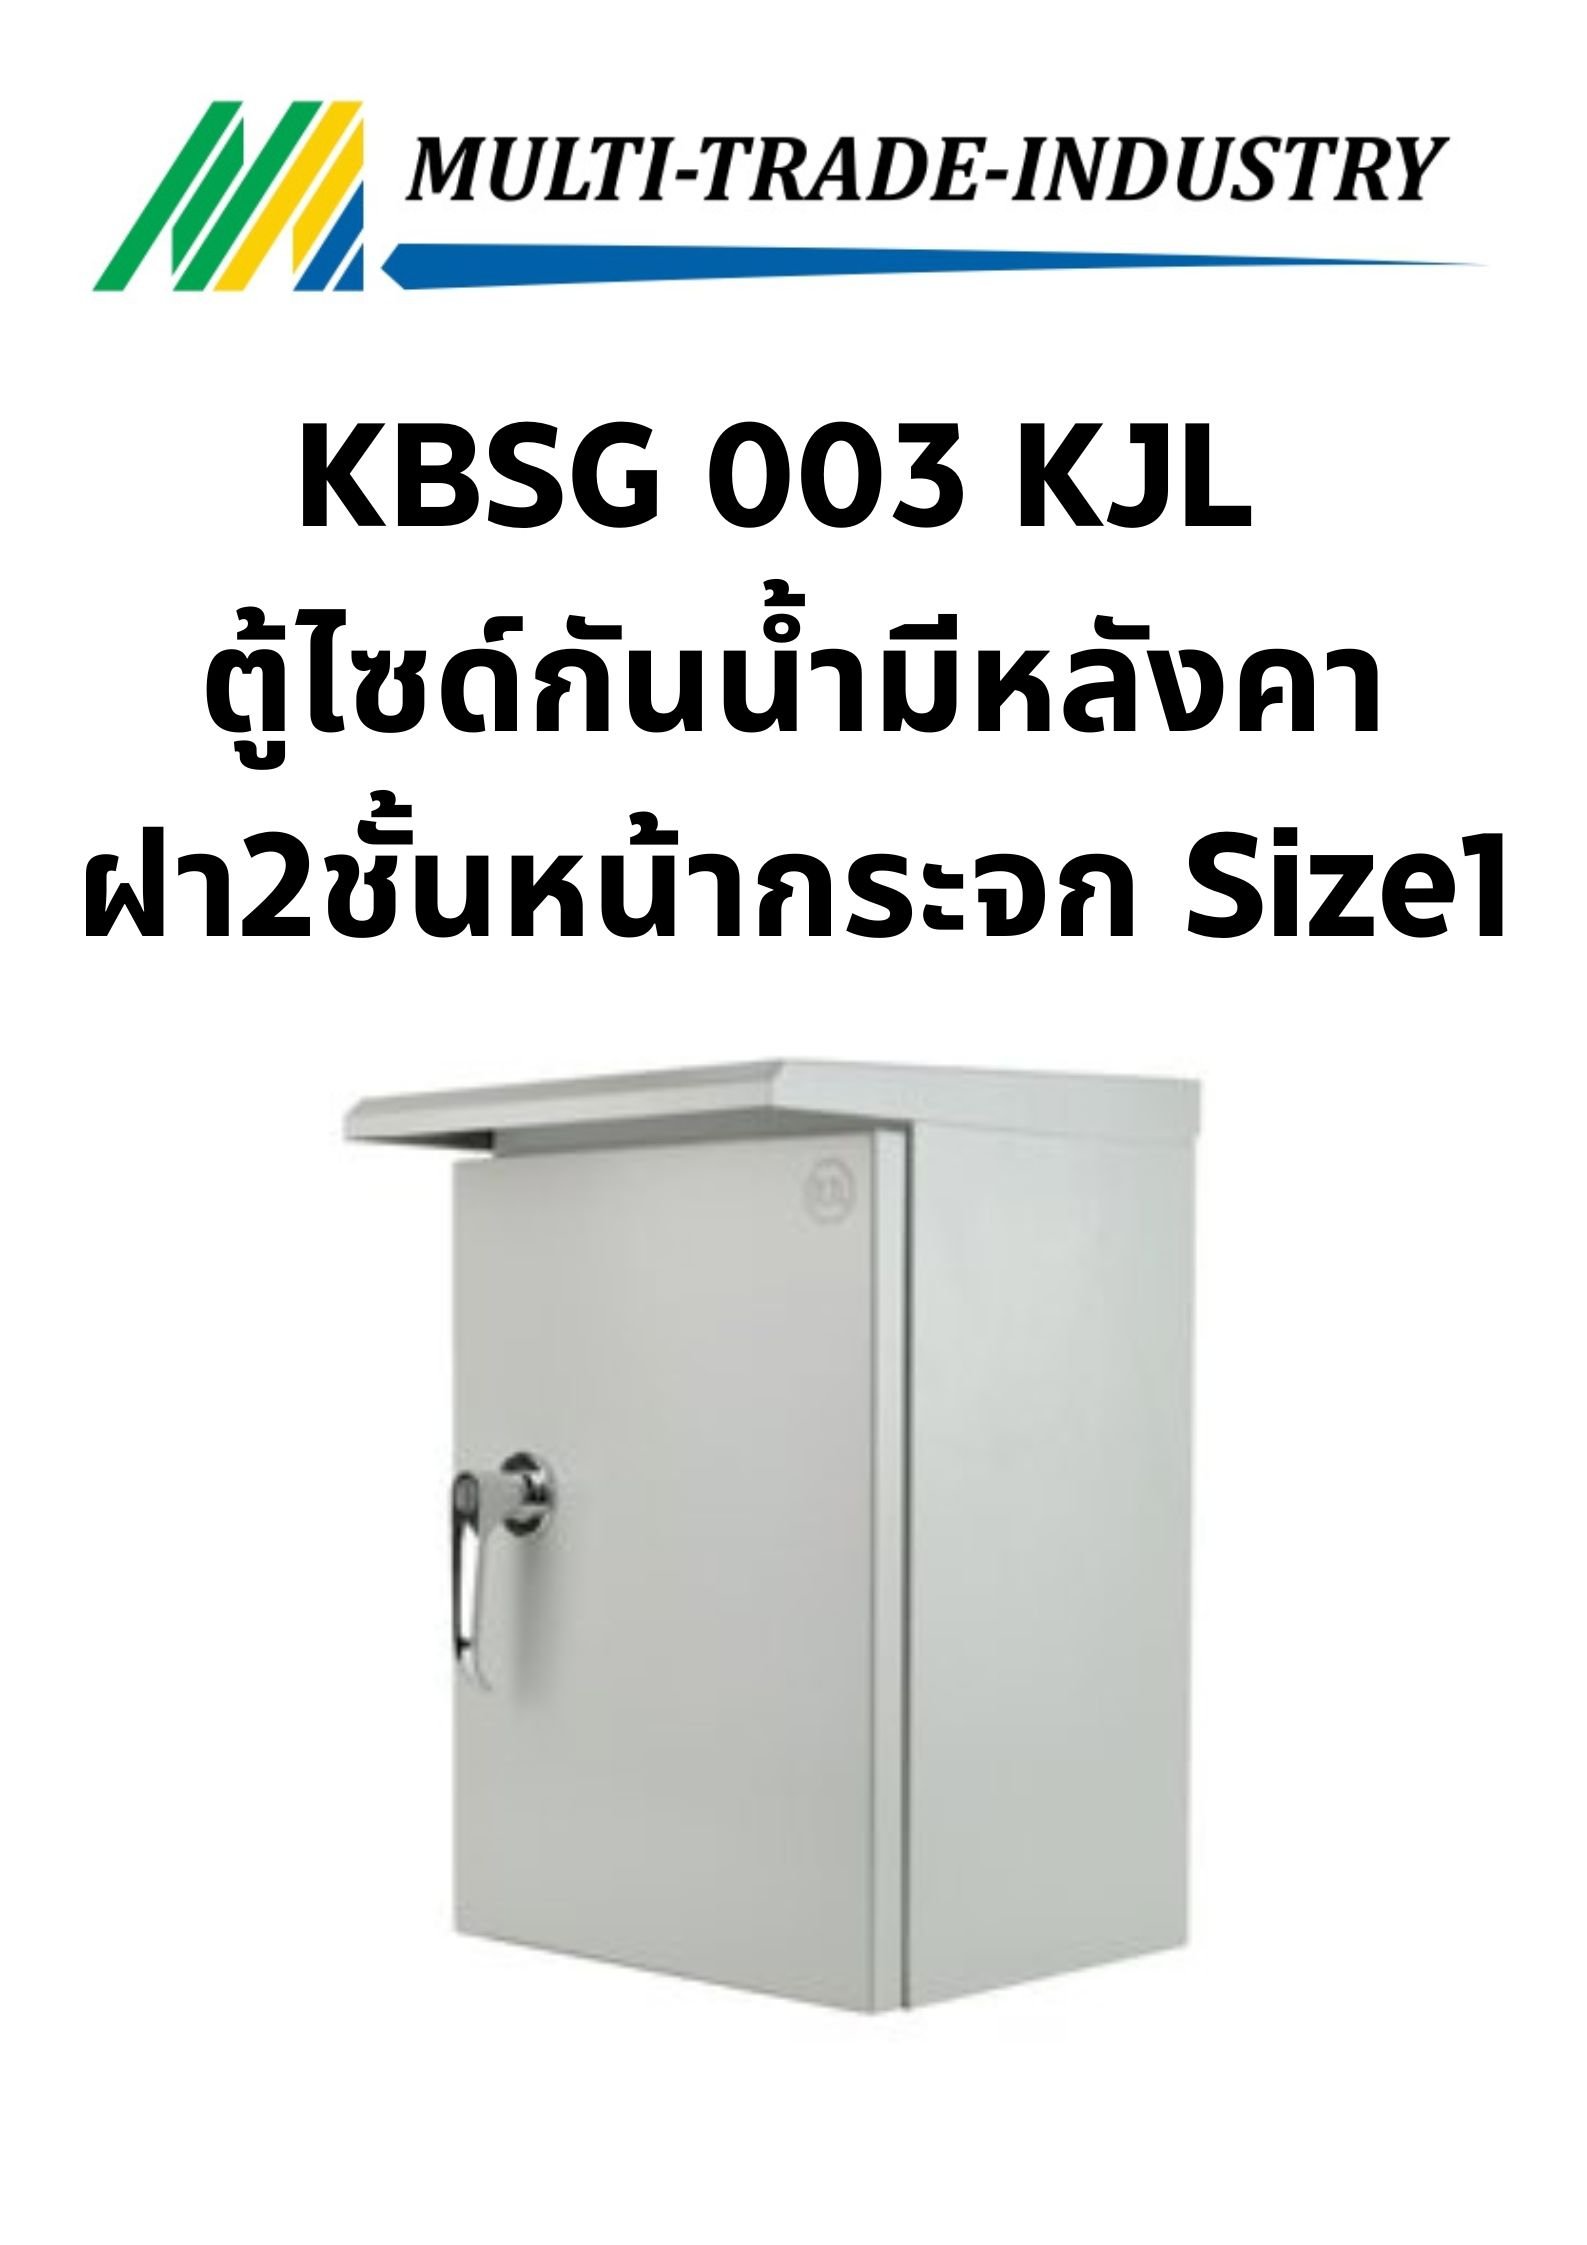 KBSG 003 KJL ตู้ไซด์กันน้ำมีหลังคา ฝา2ชั้นหน้ากระจก Size1 300x450x250